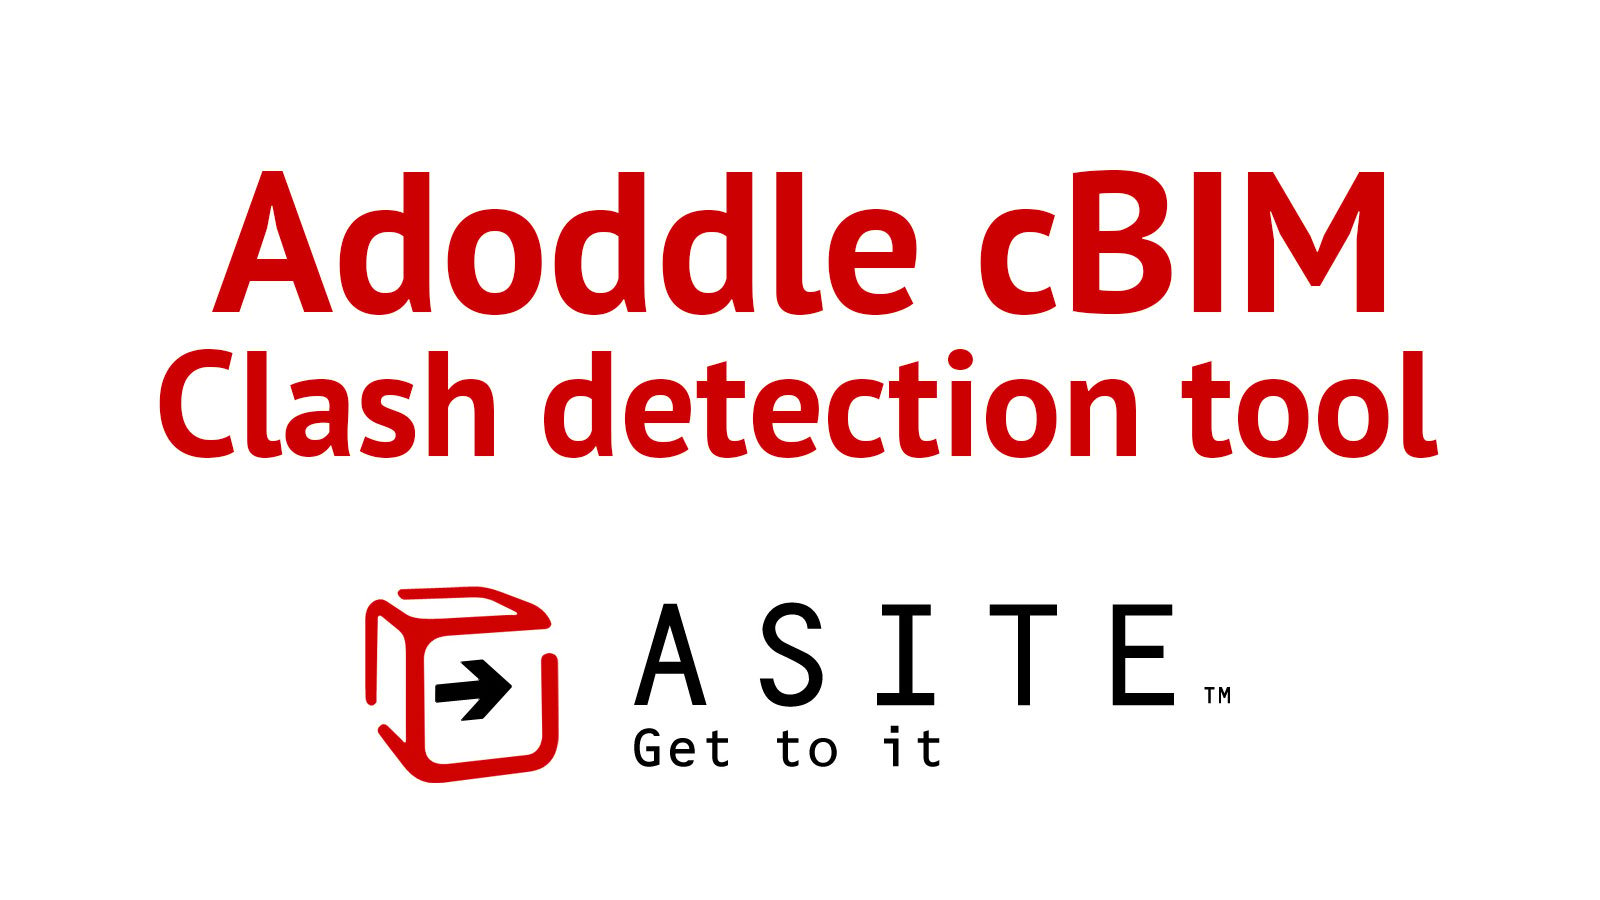 Adoddle cBIM Clash detection tool introduced!